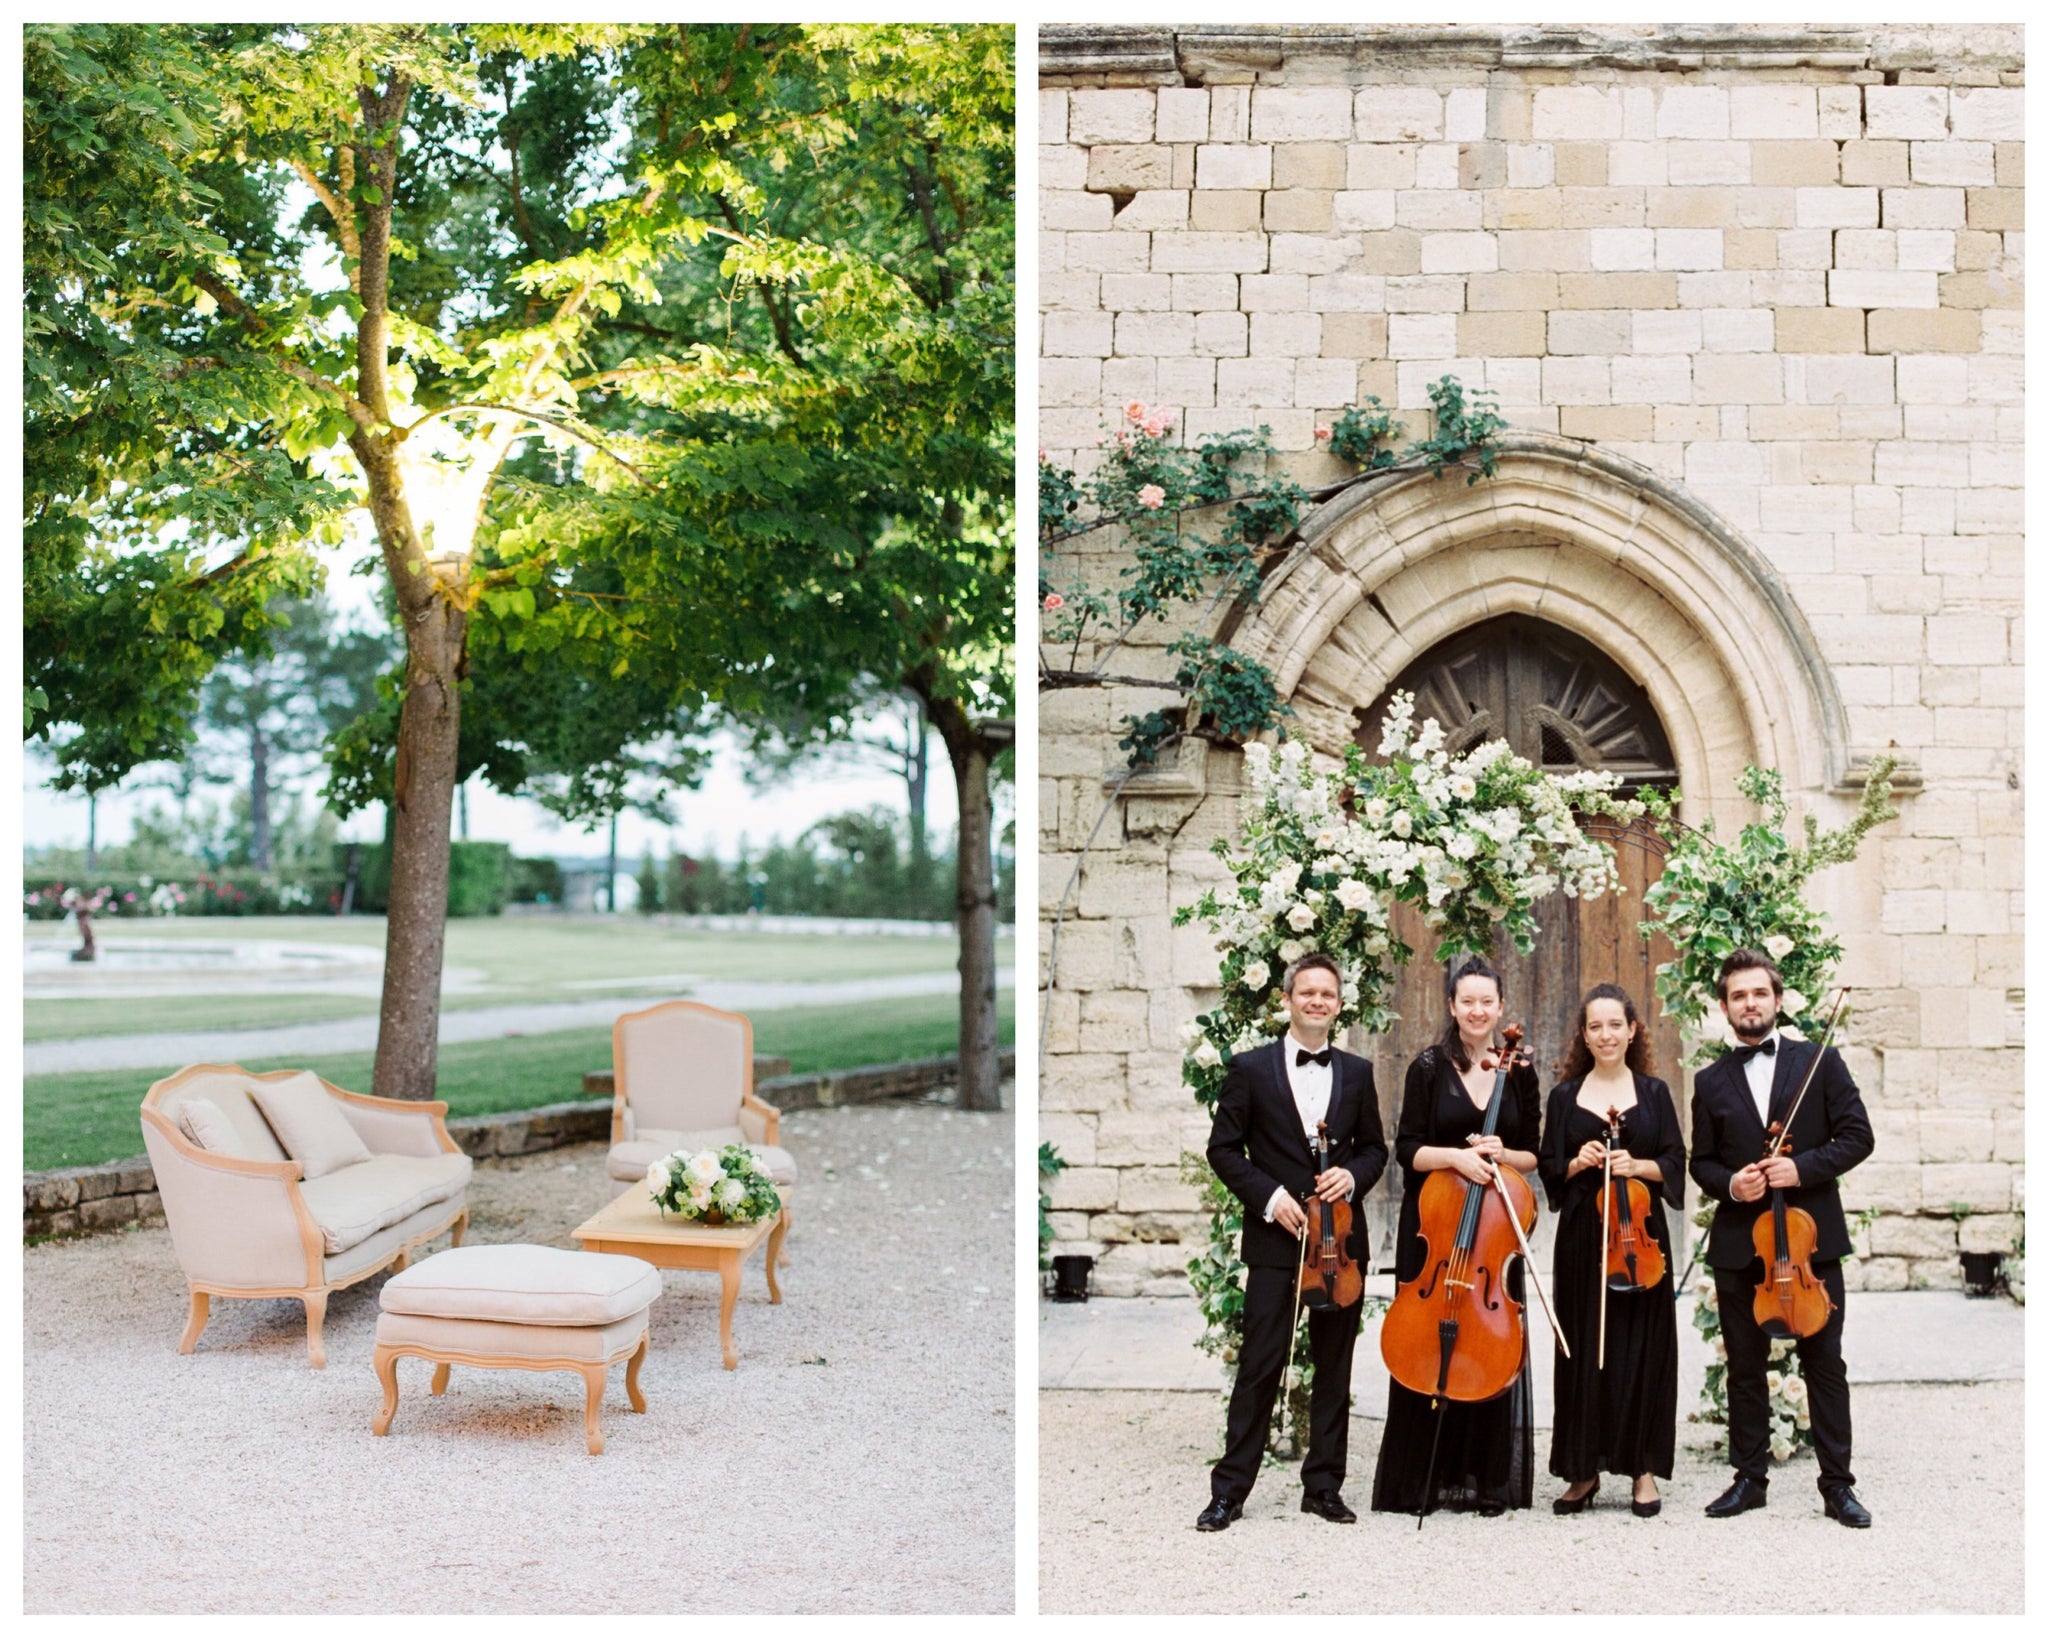 Katie Dean Jewelry romantic destination wedding at a chateau, Provence, France, Kingswood Four String Quartet + venue